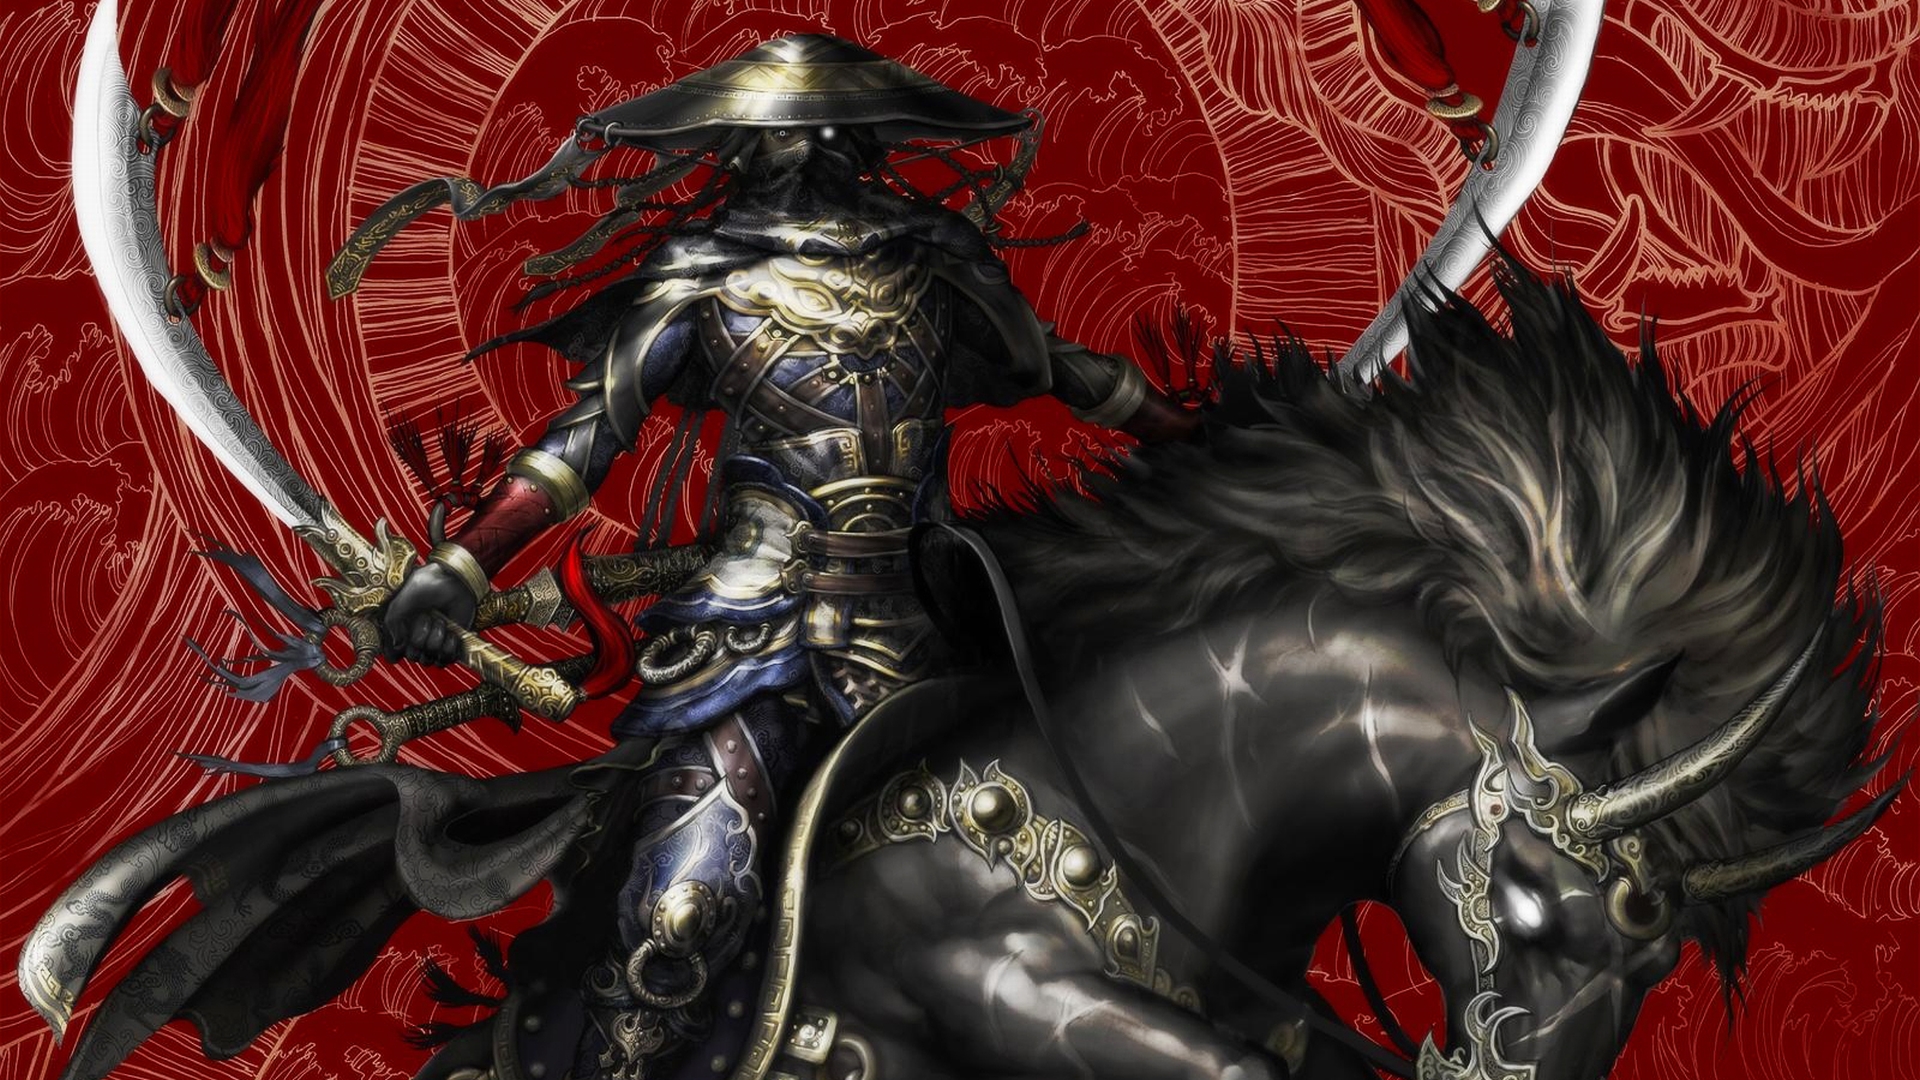 Fantasy samurai warrior with striking armor and fierce expression